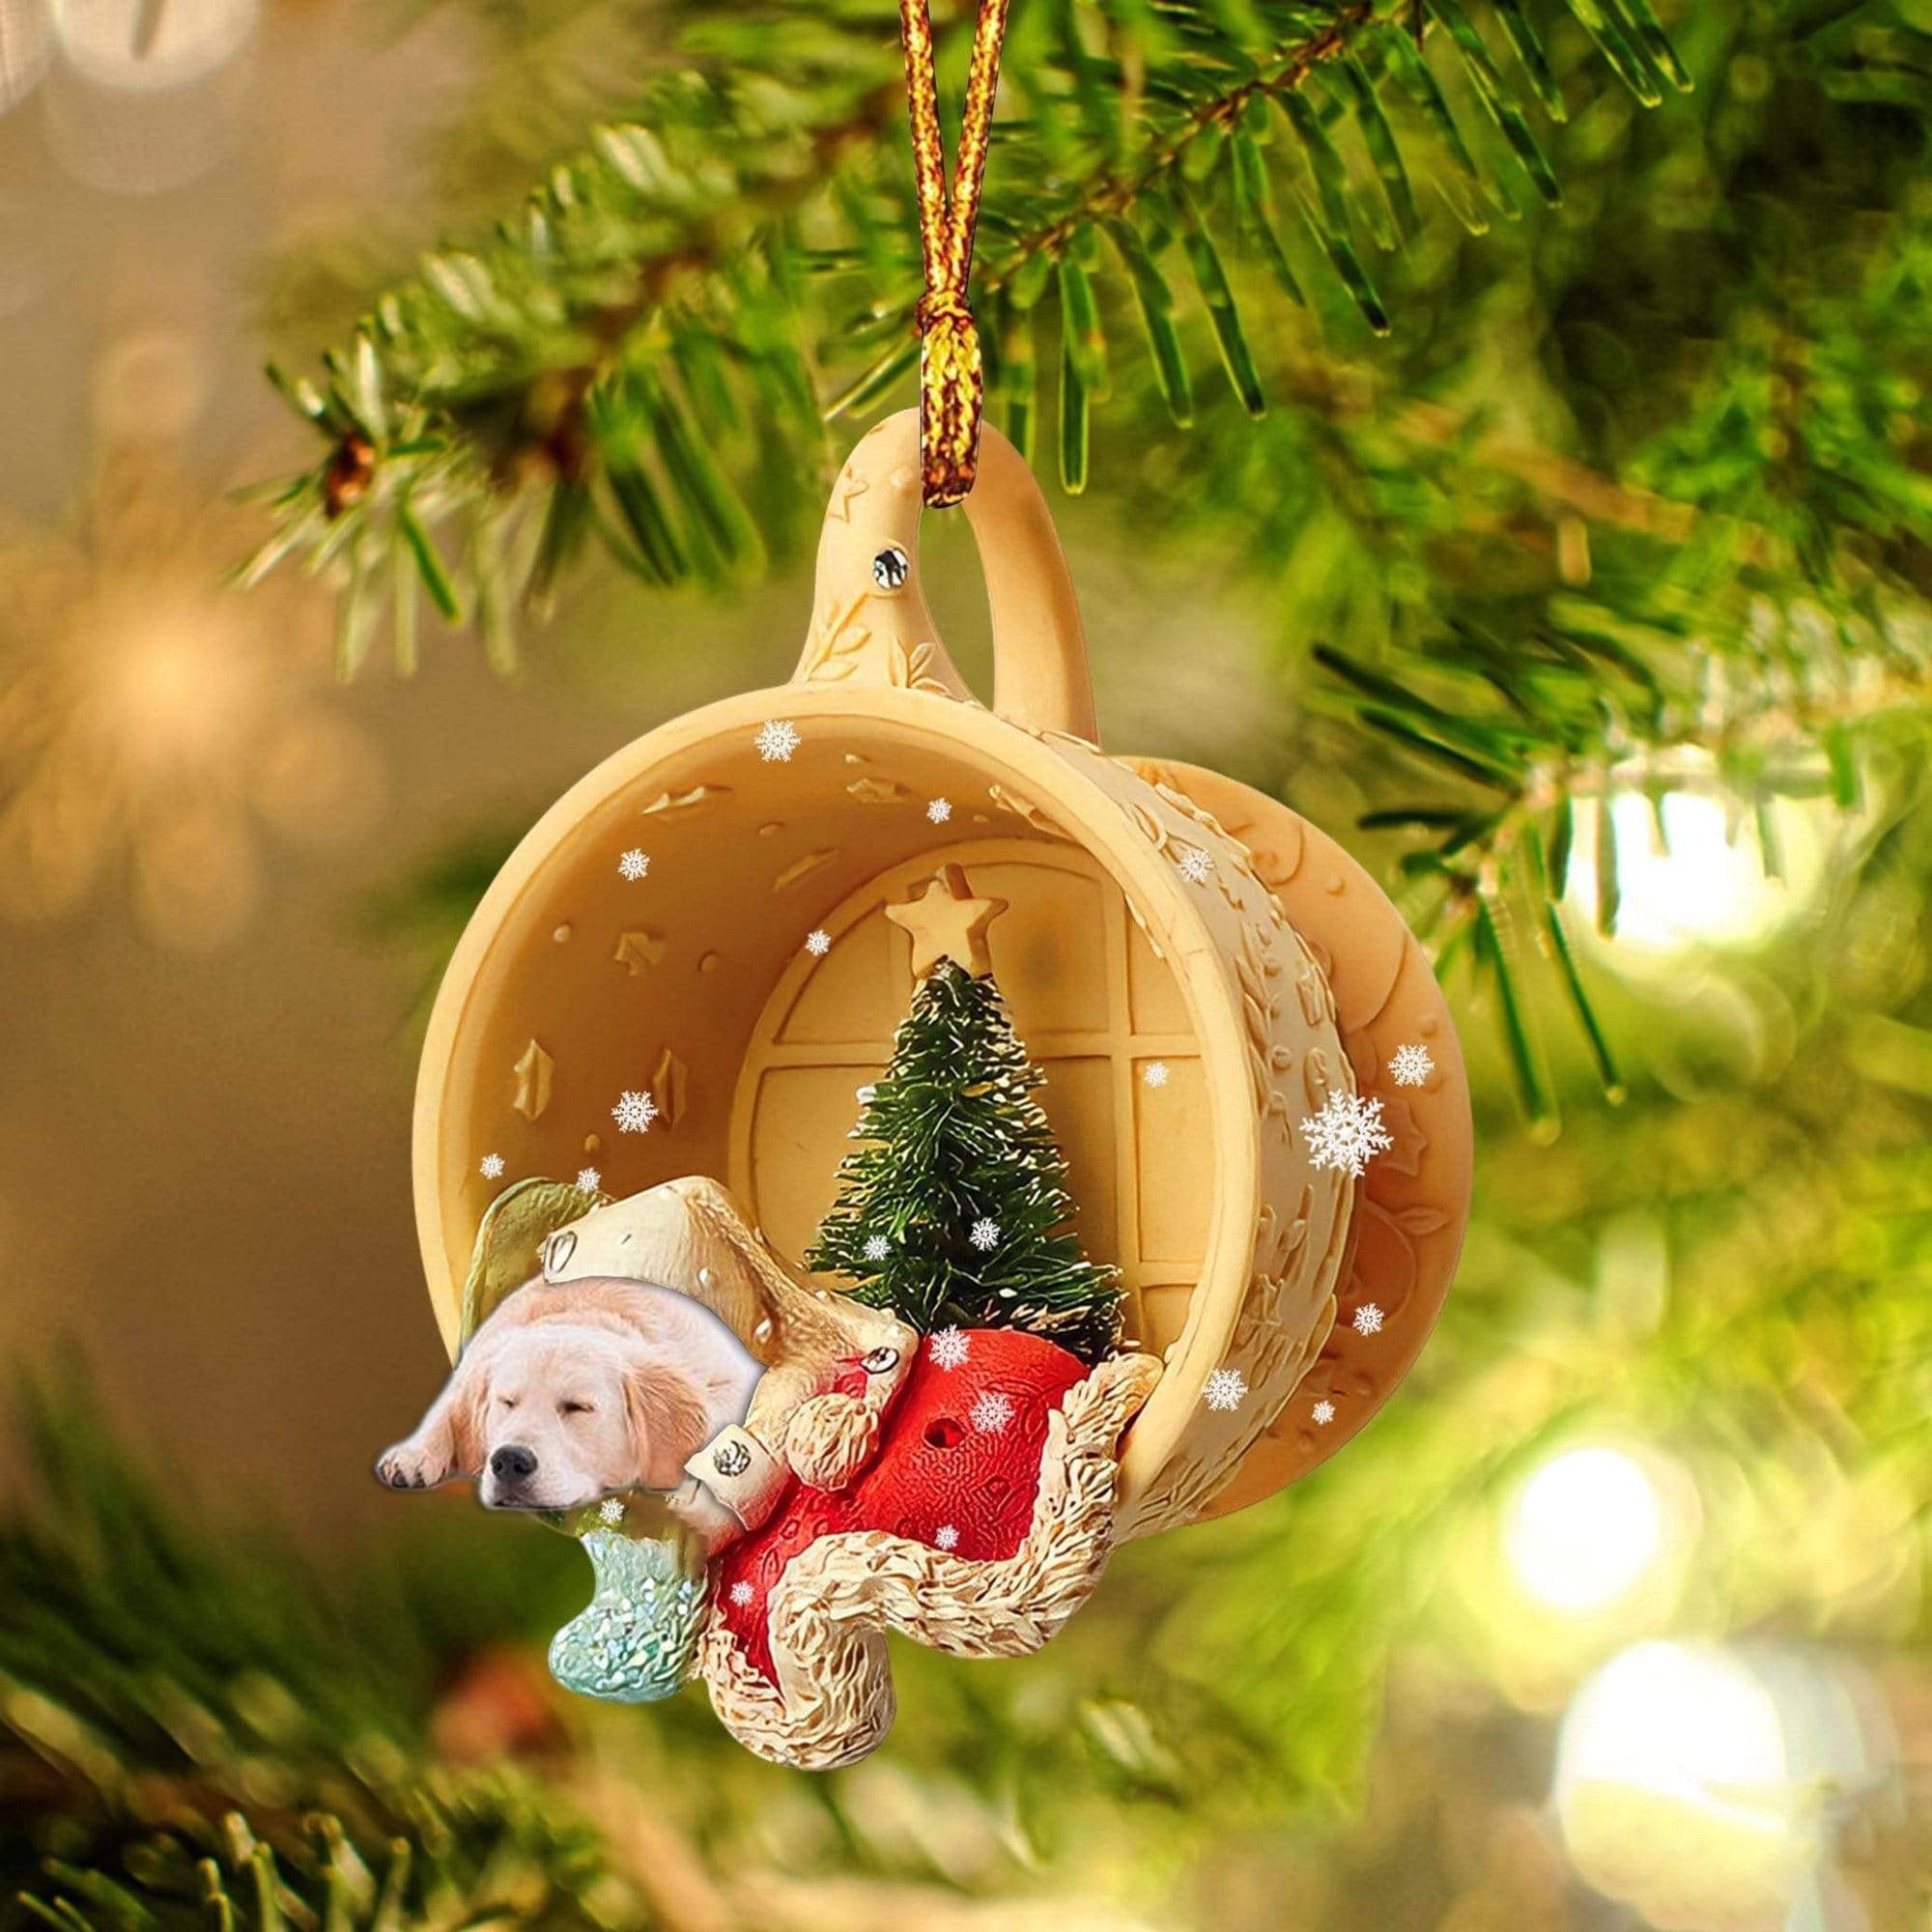 Golden Retriever Sleeping In A Cup Christmas Ornament/ Flat Acrylic Dog Christmas Ornament